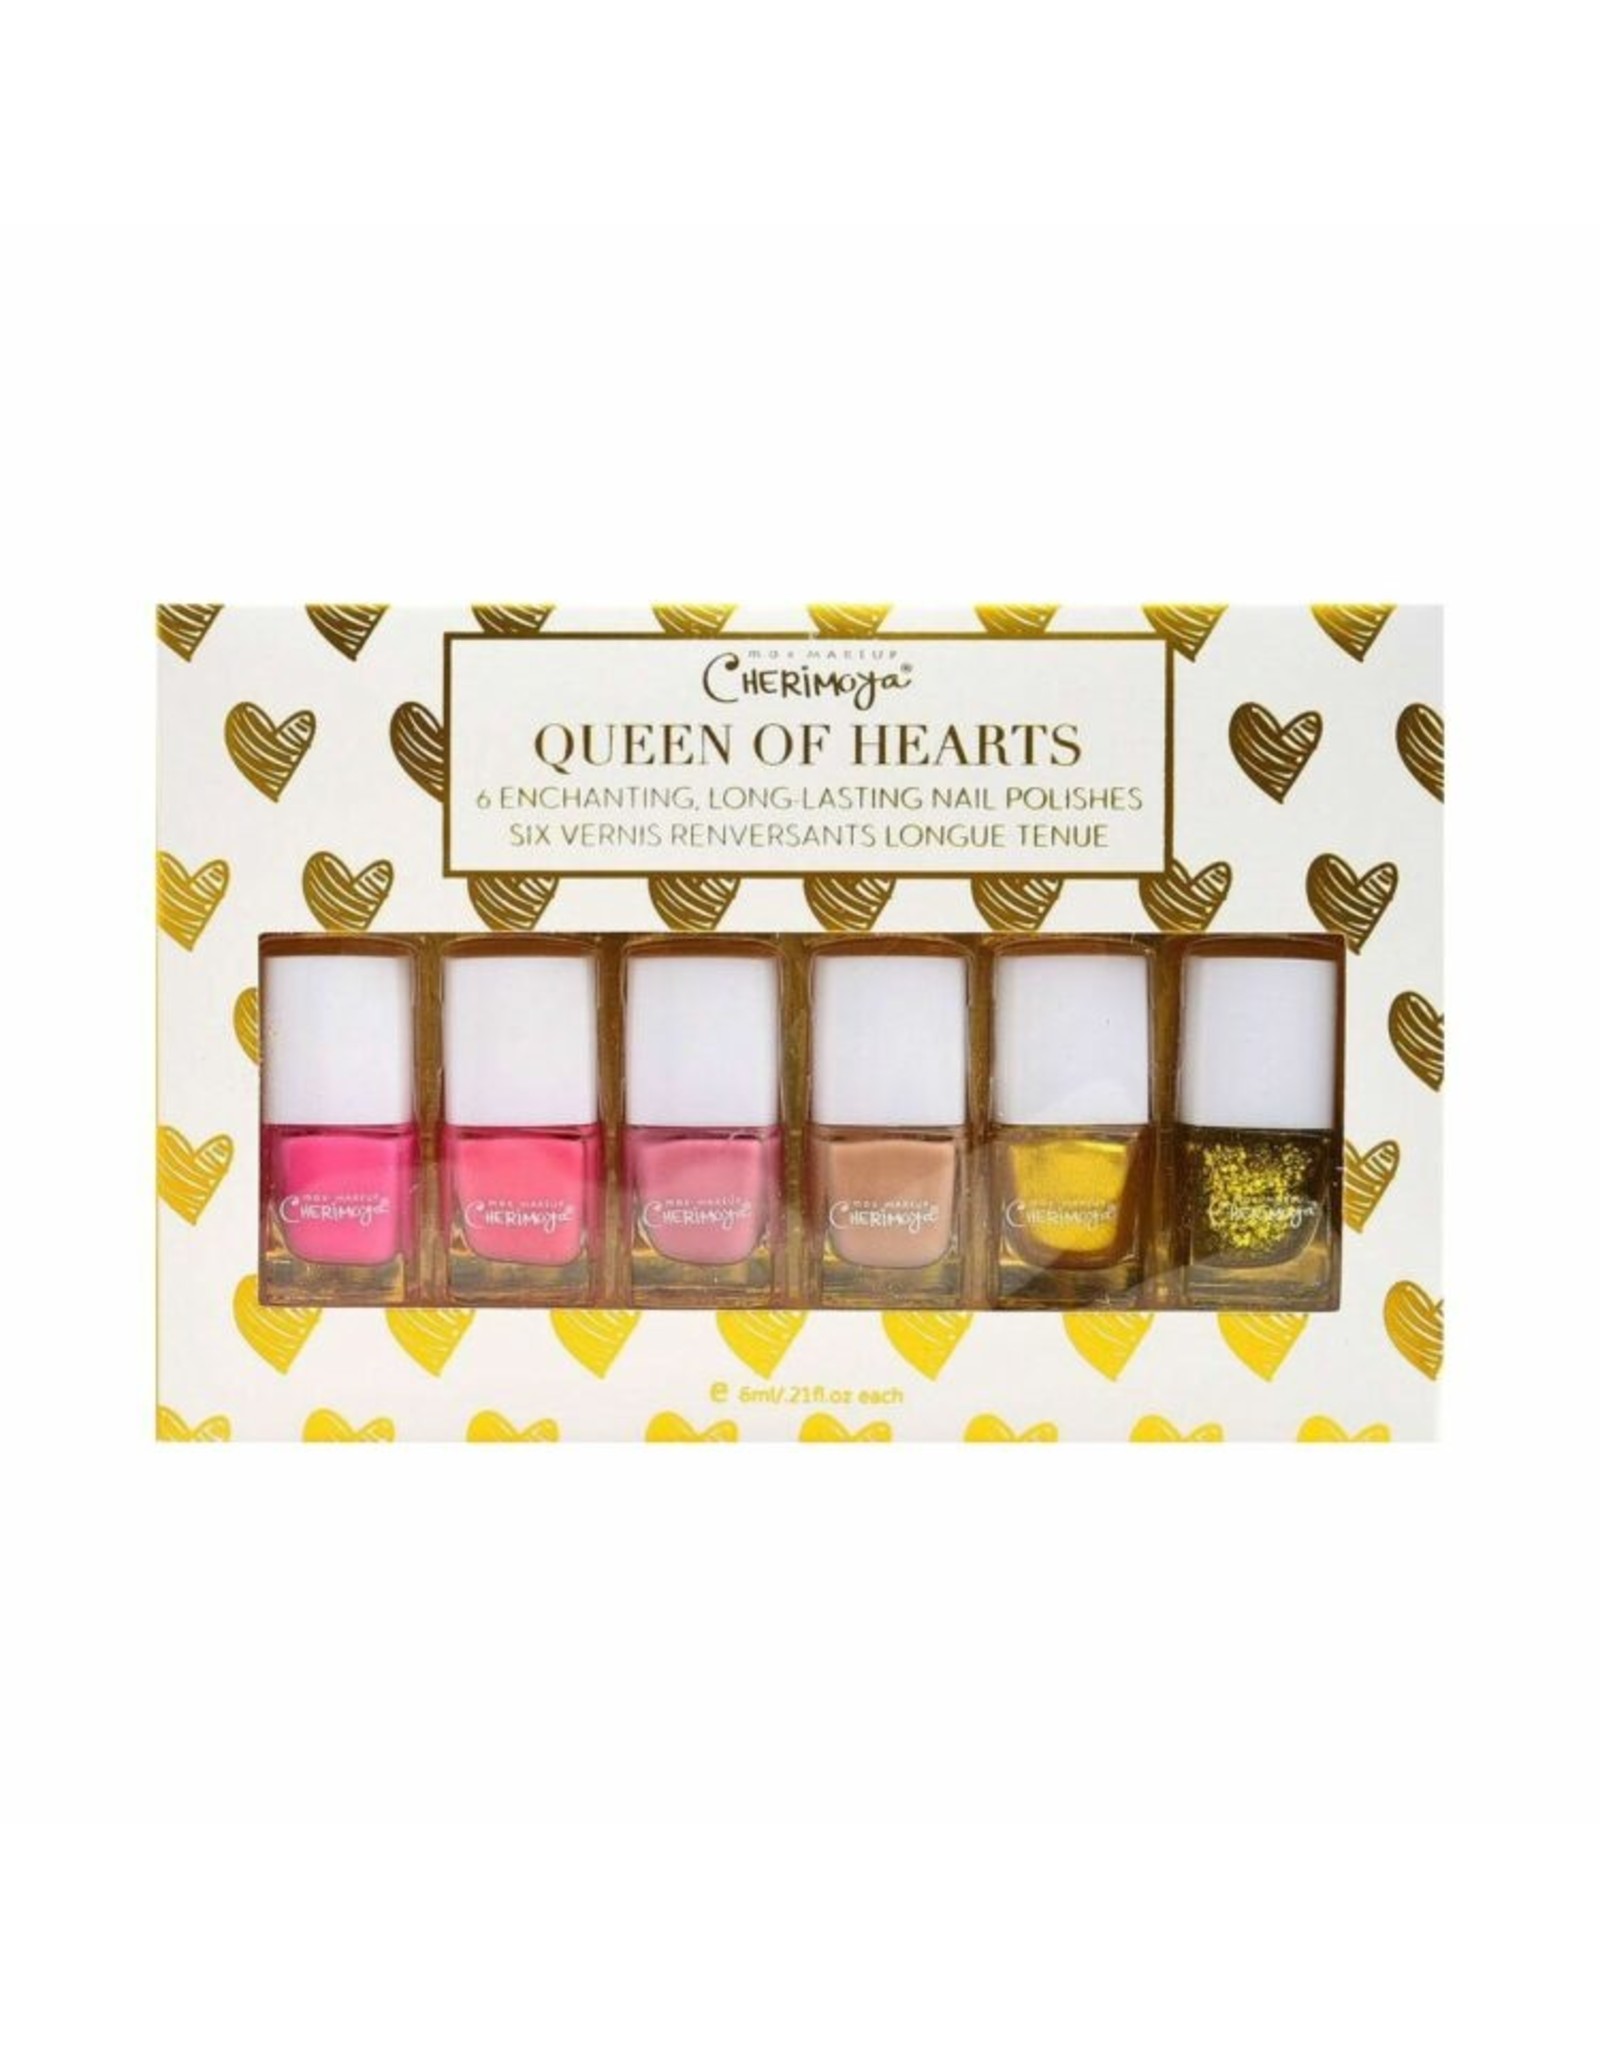 Cherimoya Queen of Hearts 6 PCS Nail Polish Set